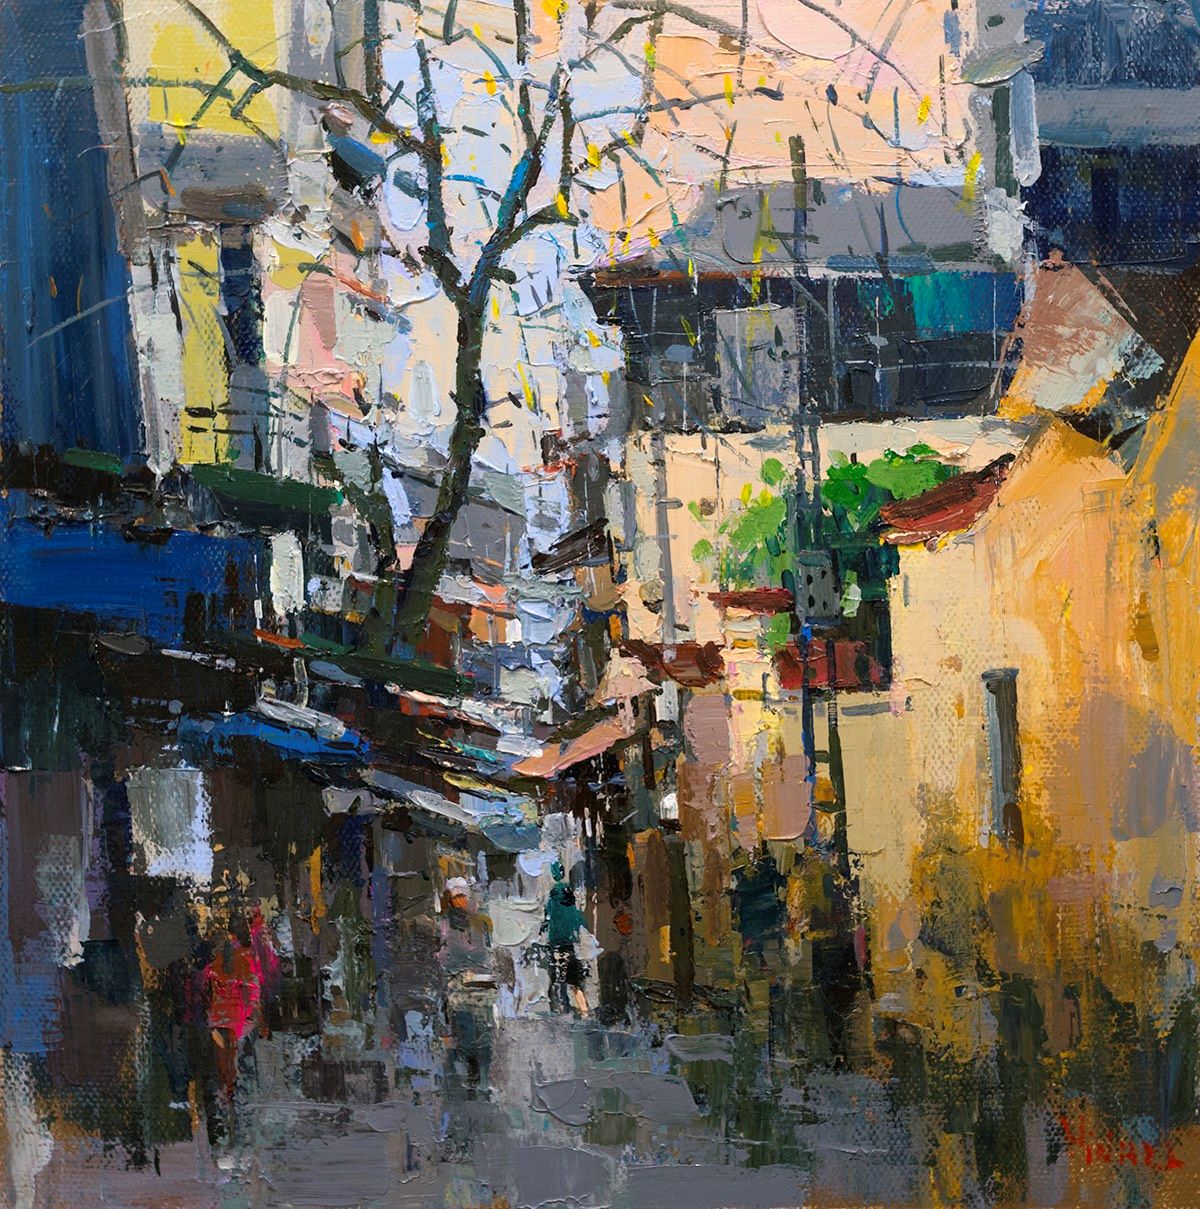 Street Corner IX - Vietnamese Oil Painting by Artist Pham Hoang Minh